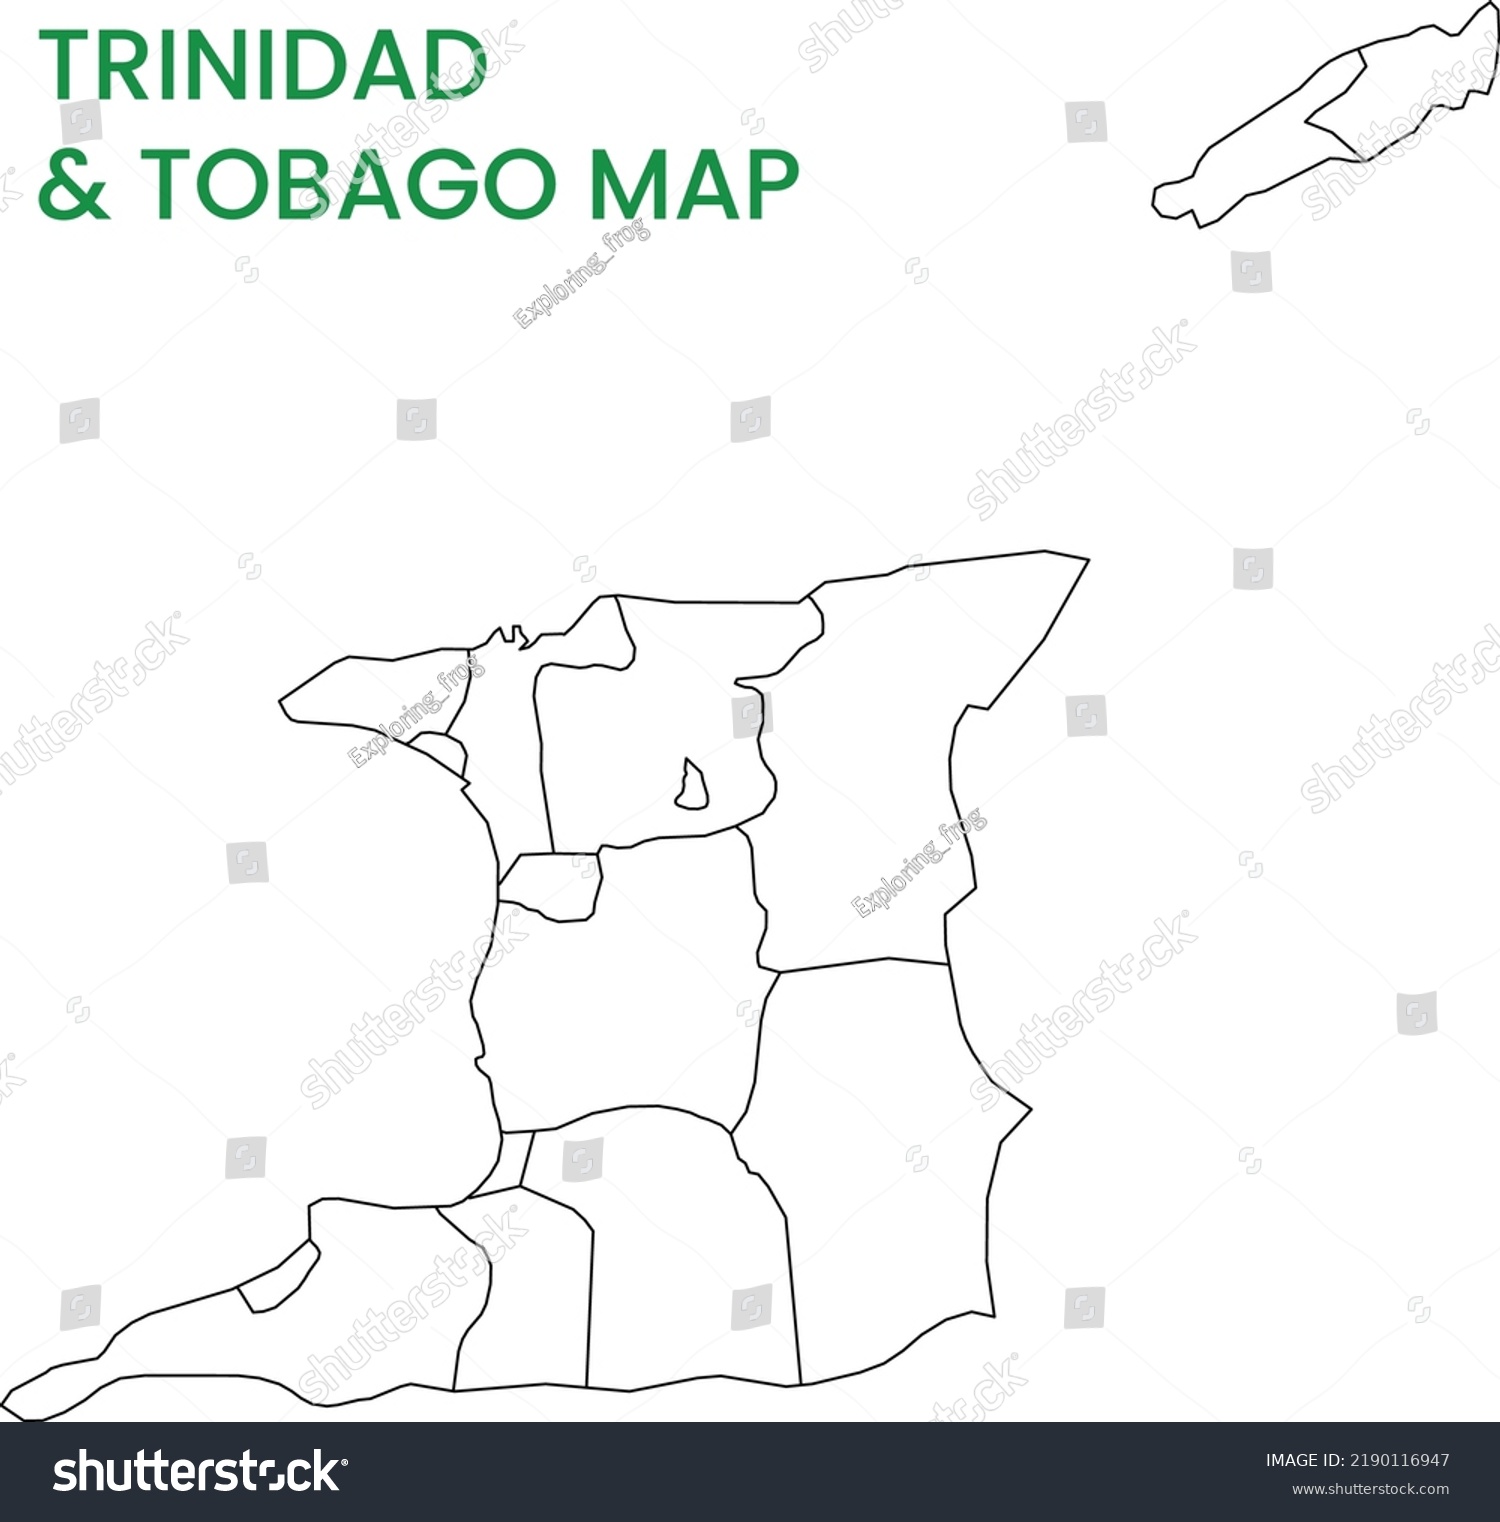 Stock Vector High Detailed Map Trinidad And Tobago Trinidad And Tobago States Map Outline Map Of Trinidad 2190116947 